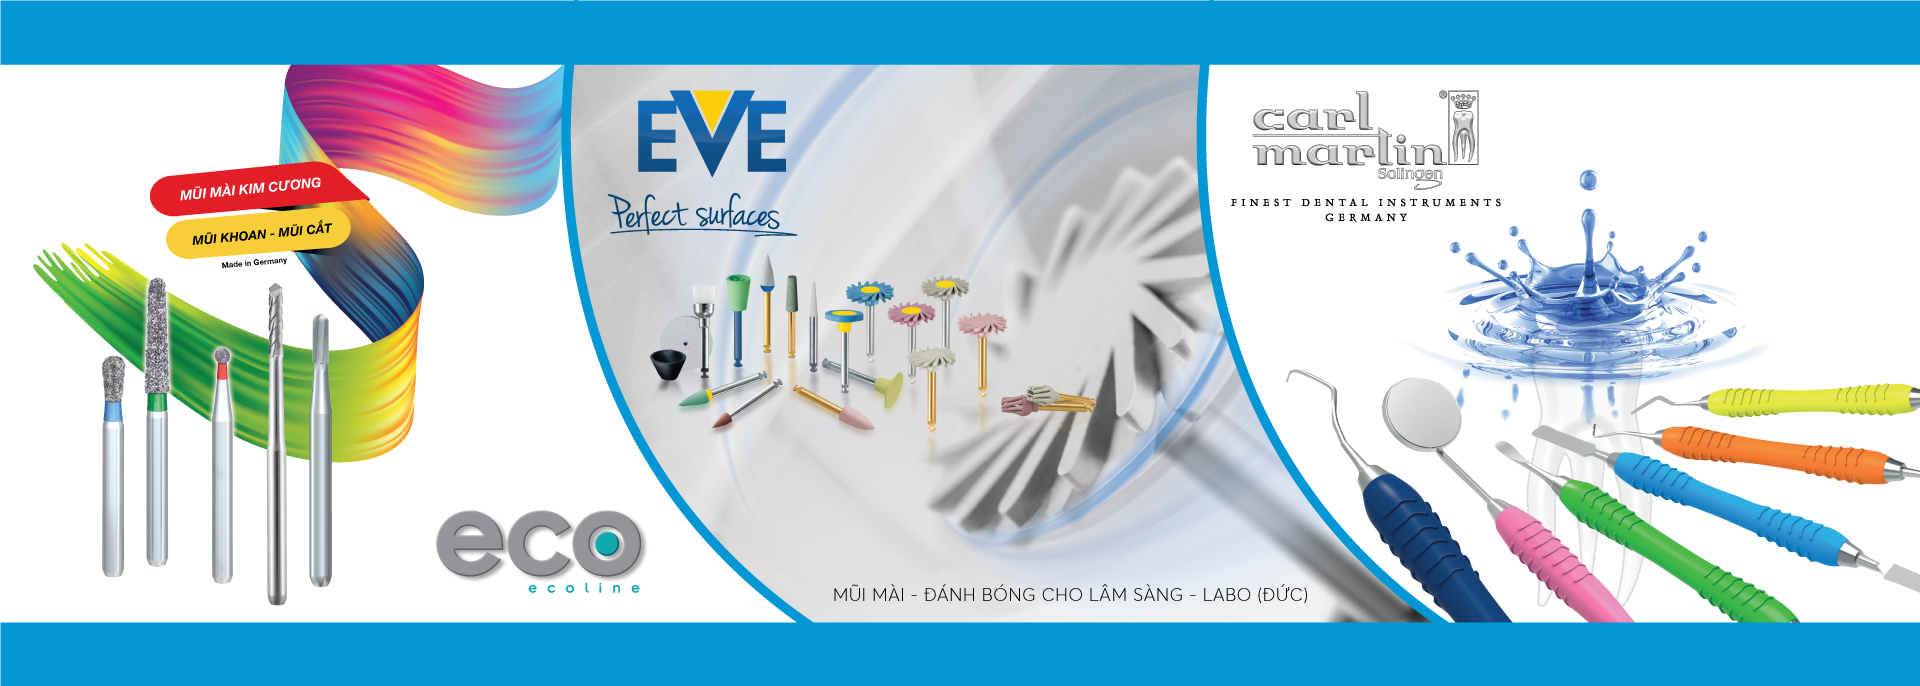 Ecoline-EVE-CarlMartin